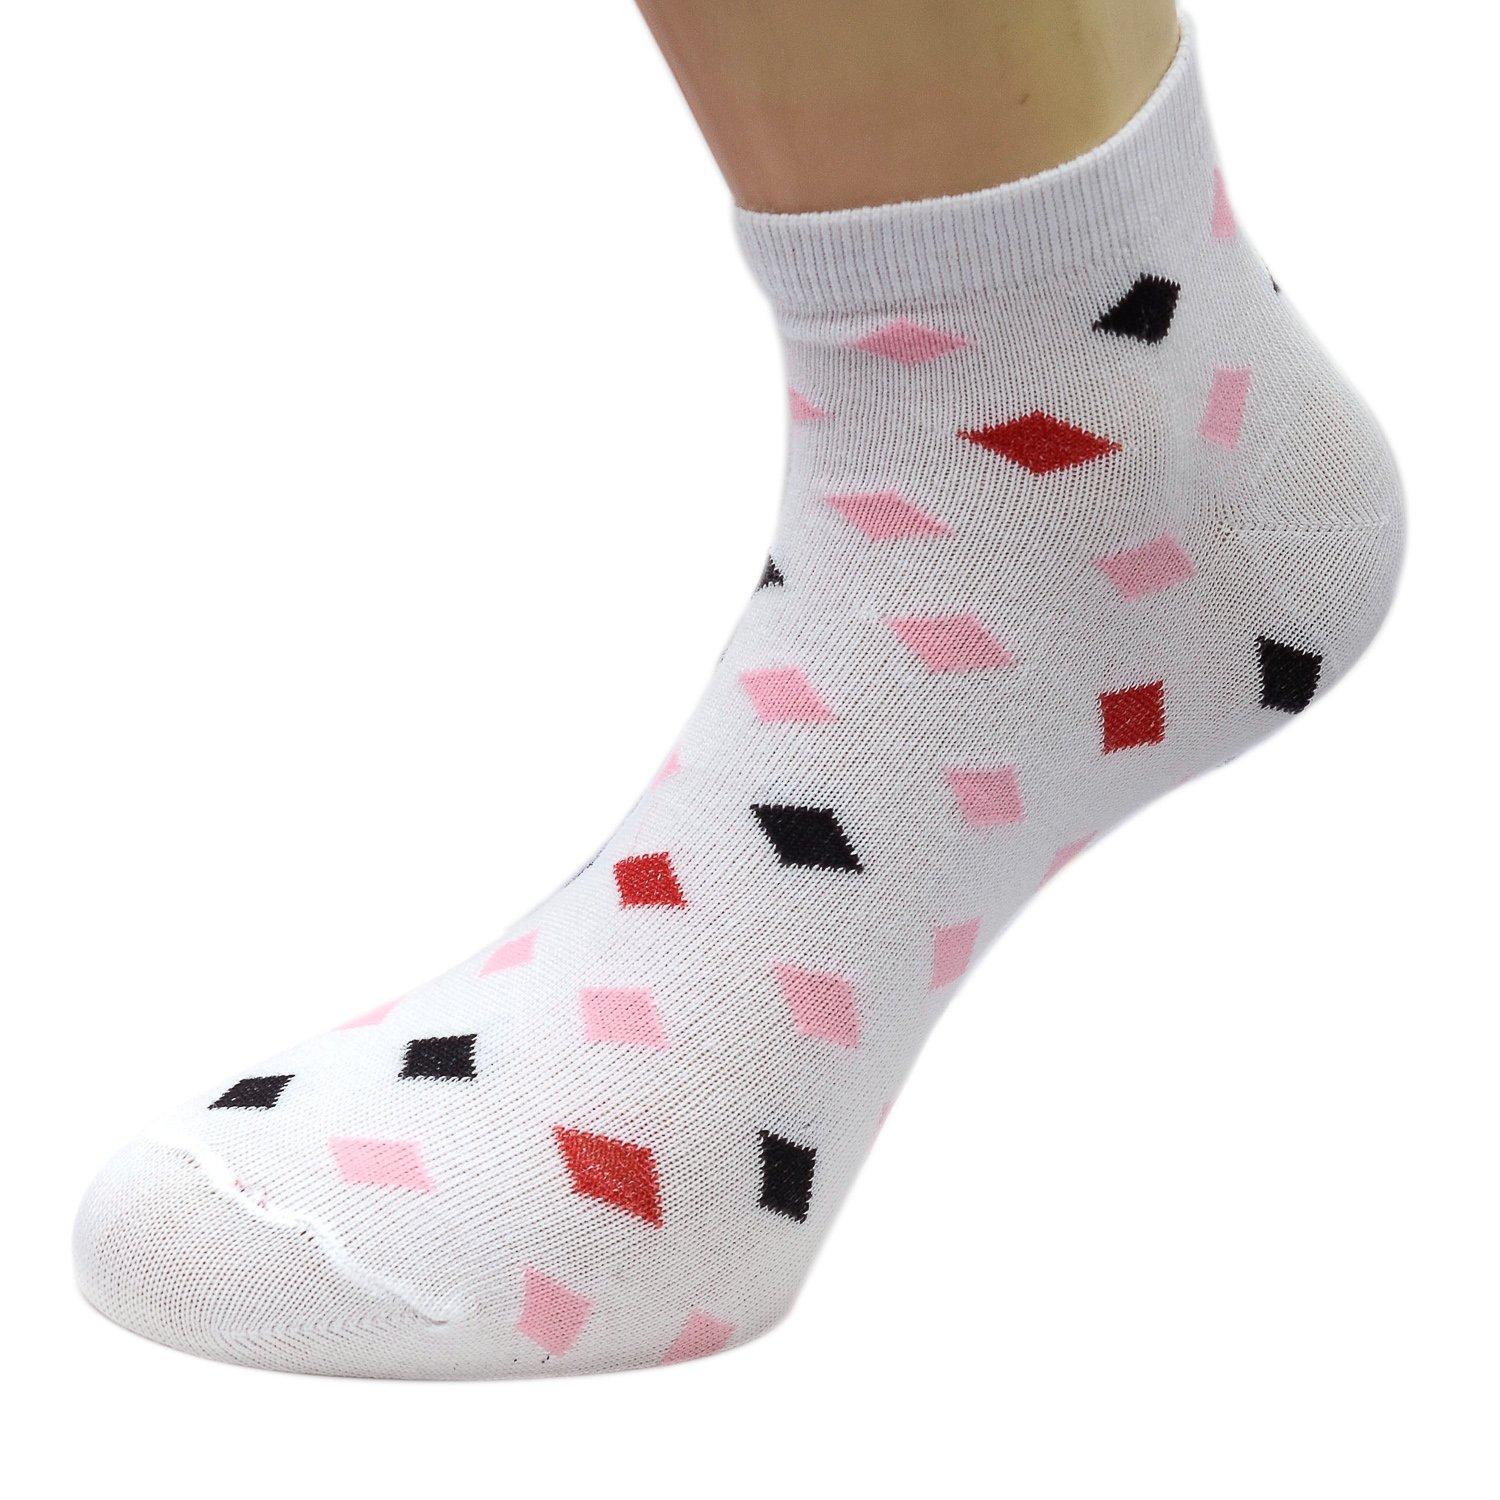 Footprints Organic Cotton Women Low cut Socks- Pack of 5 Pairs -2 Grey,2 White,1Black - Freesize